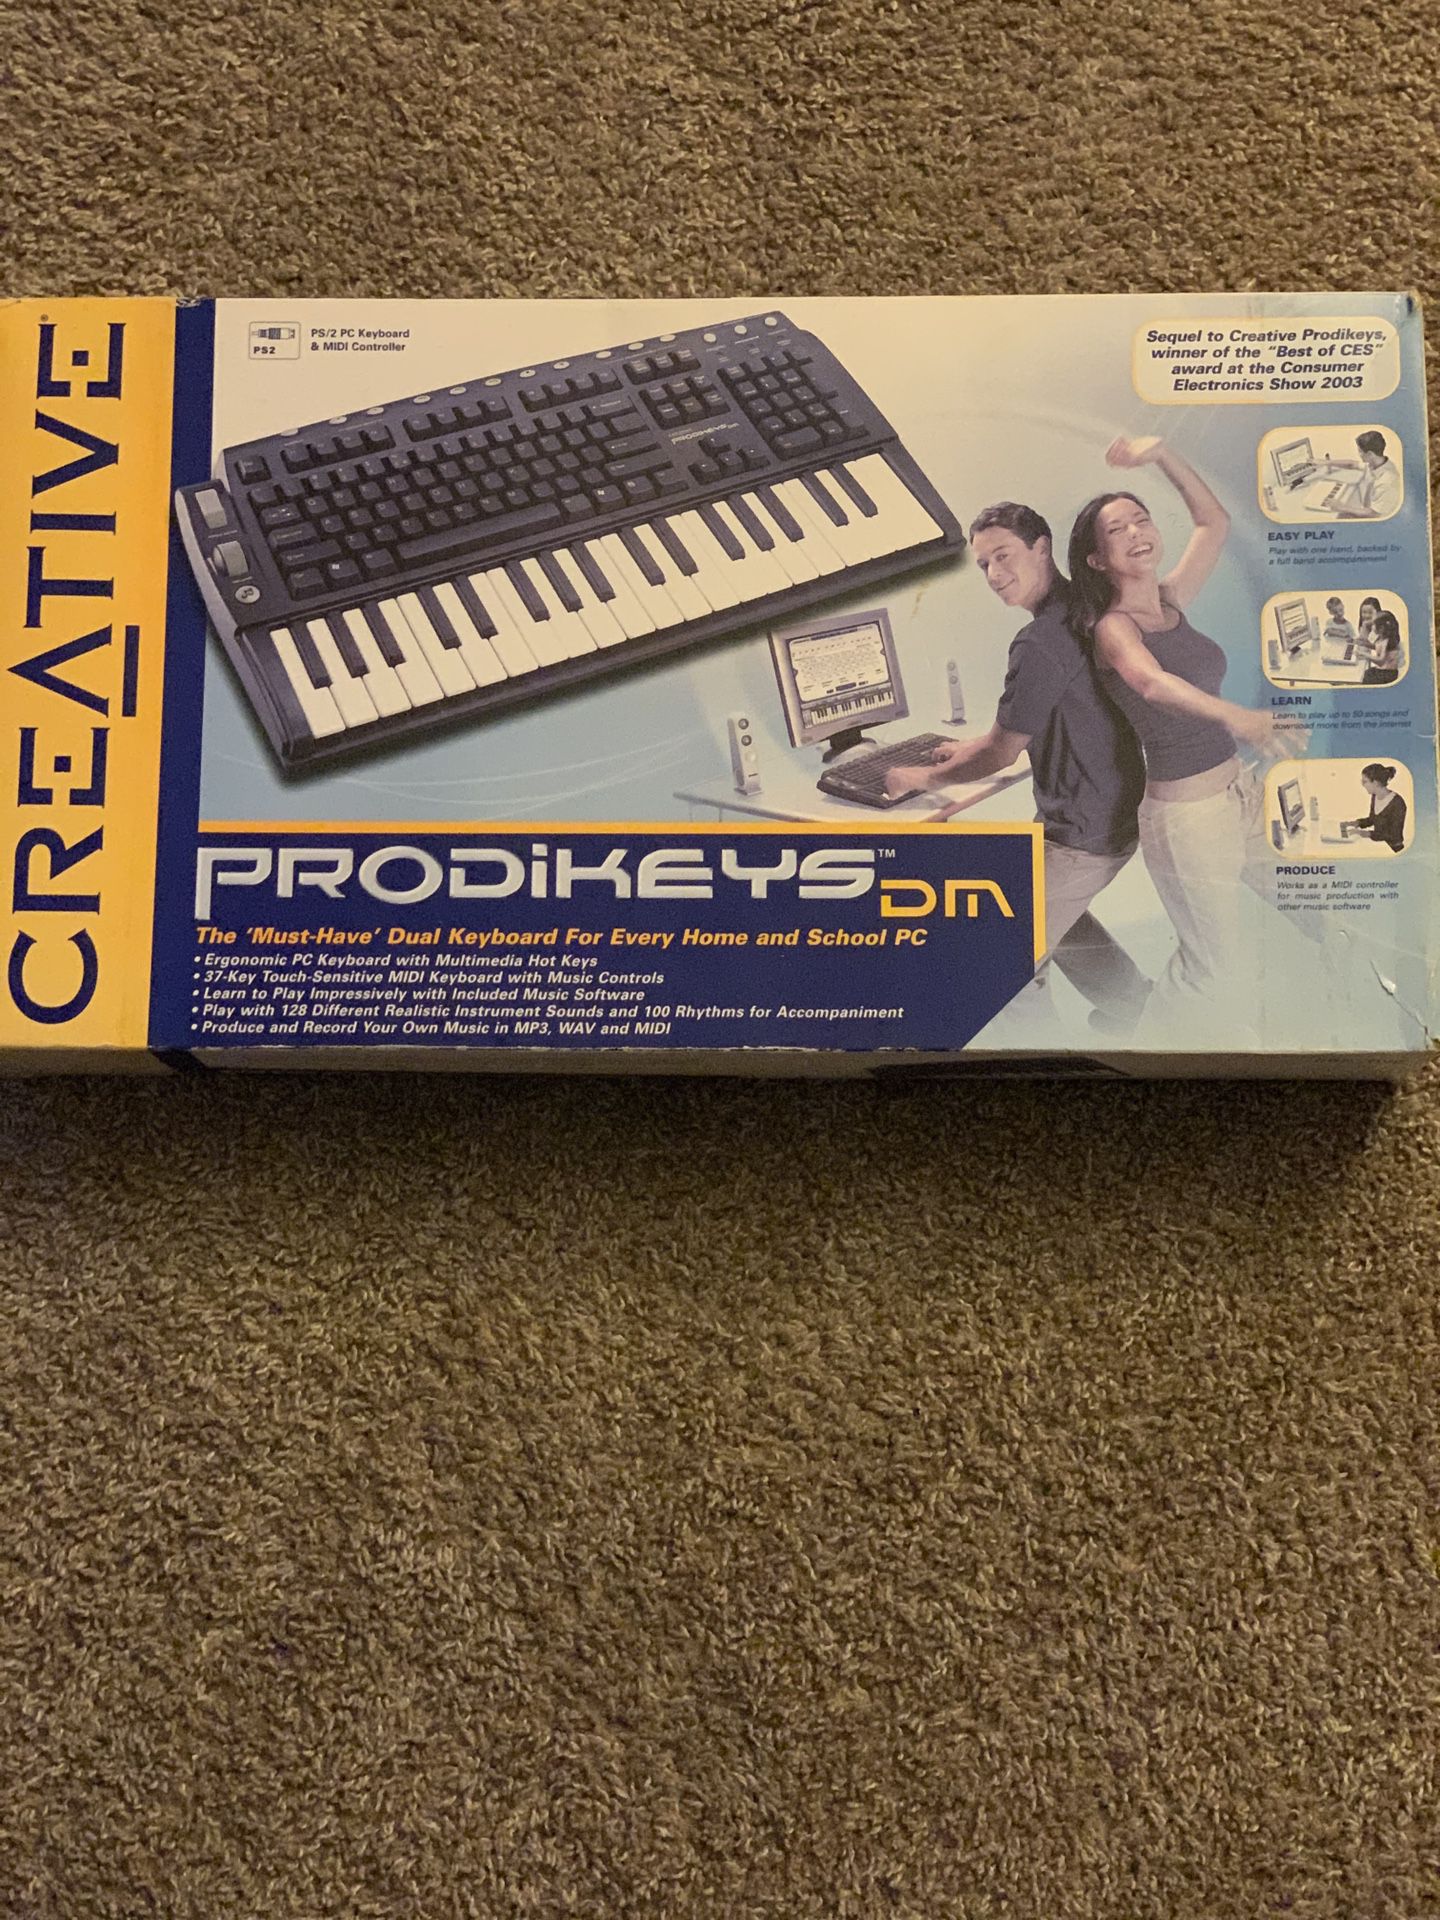 Prodikeys DM musical keyboard and regular keyboard